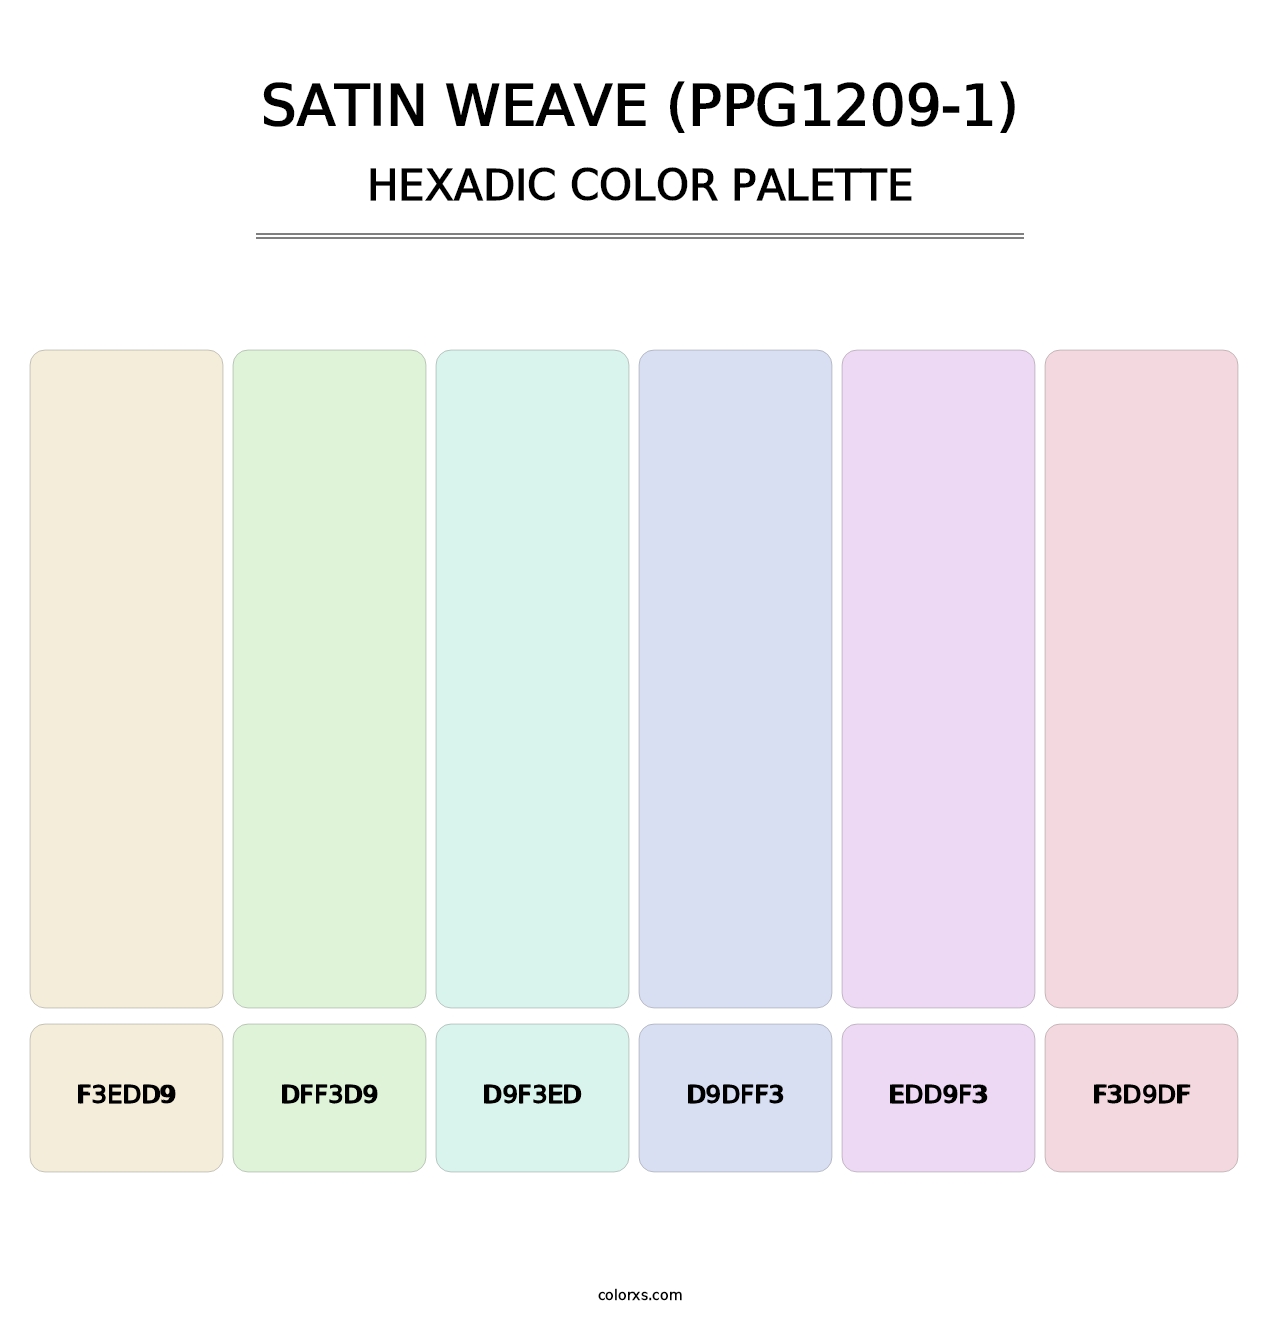 Satin Weave (PPG1209-1) - Hexadic Color Palette